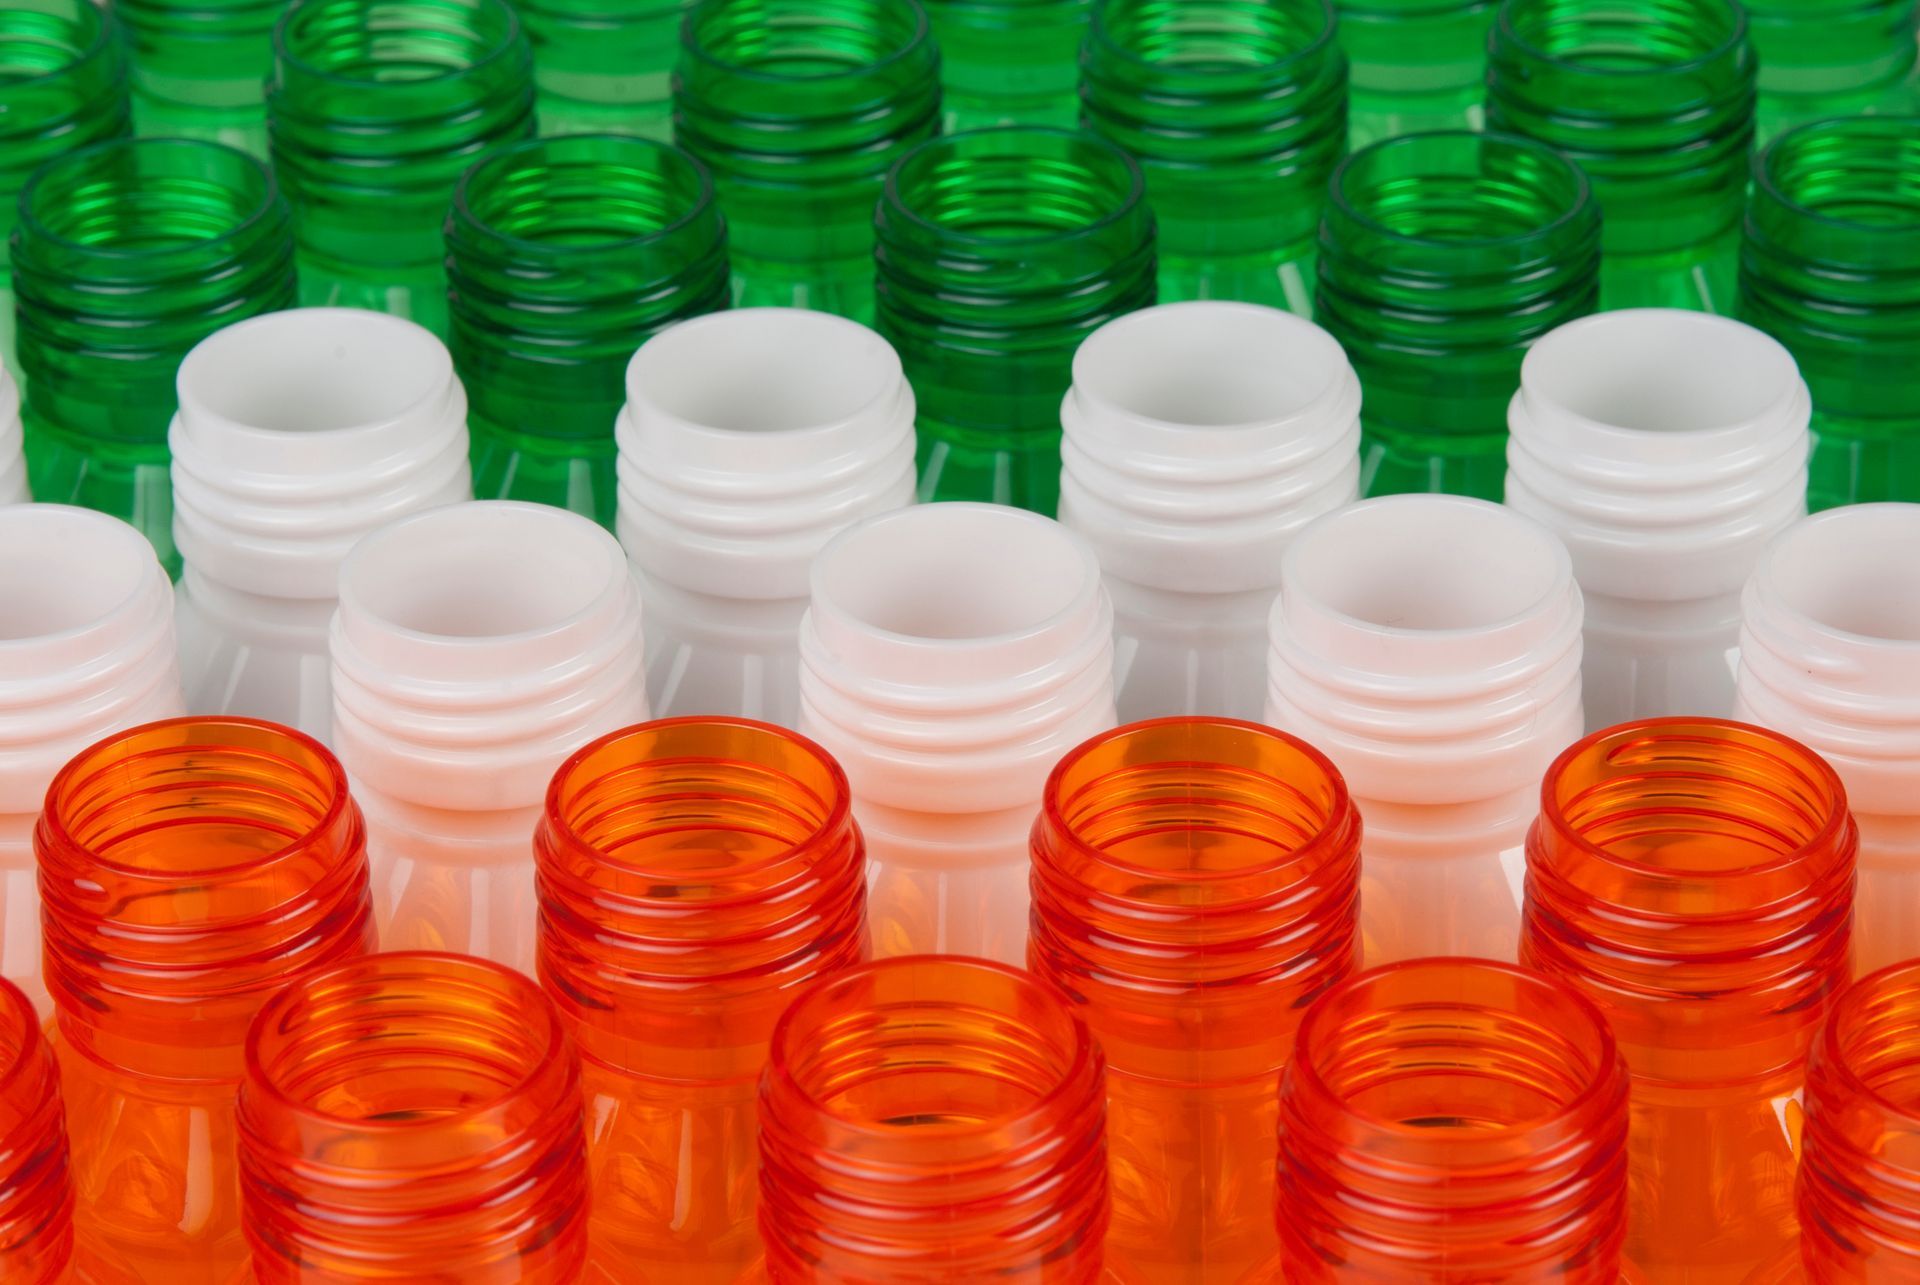 Multi-colored PET plastic pill bottles on display.